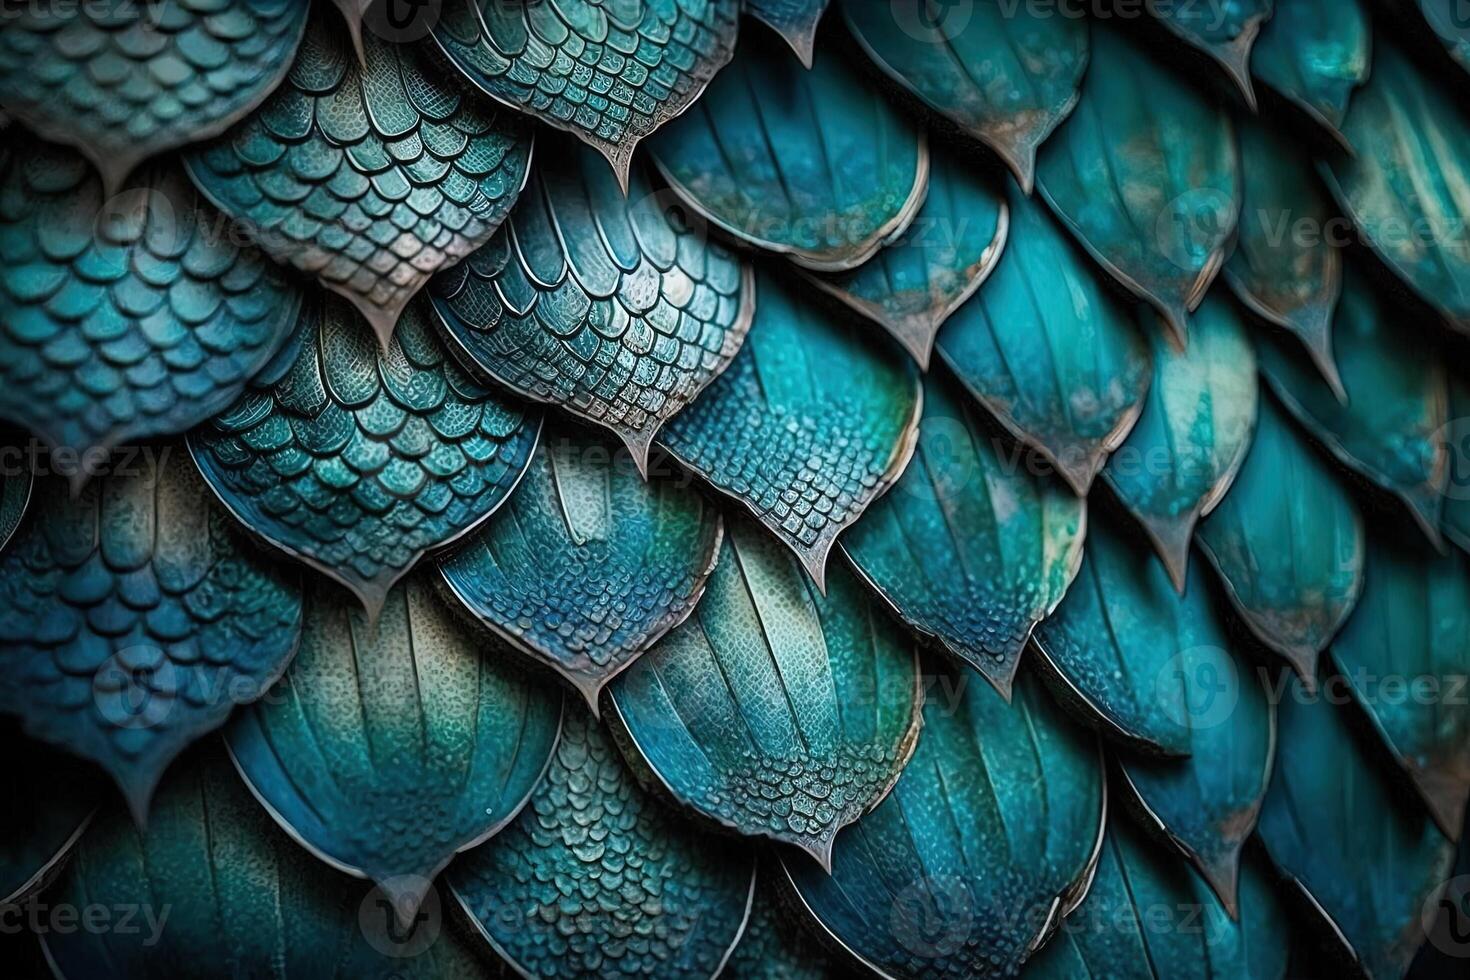 Dragon scales background - turquoise shining shells . Simple background made of dragon scale armor illustration . photo